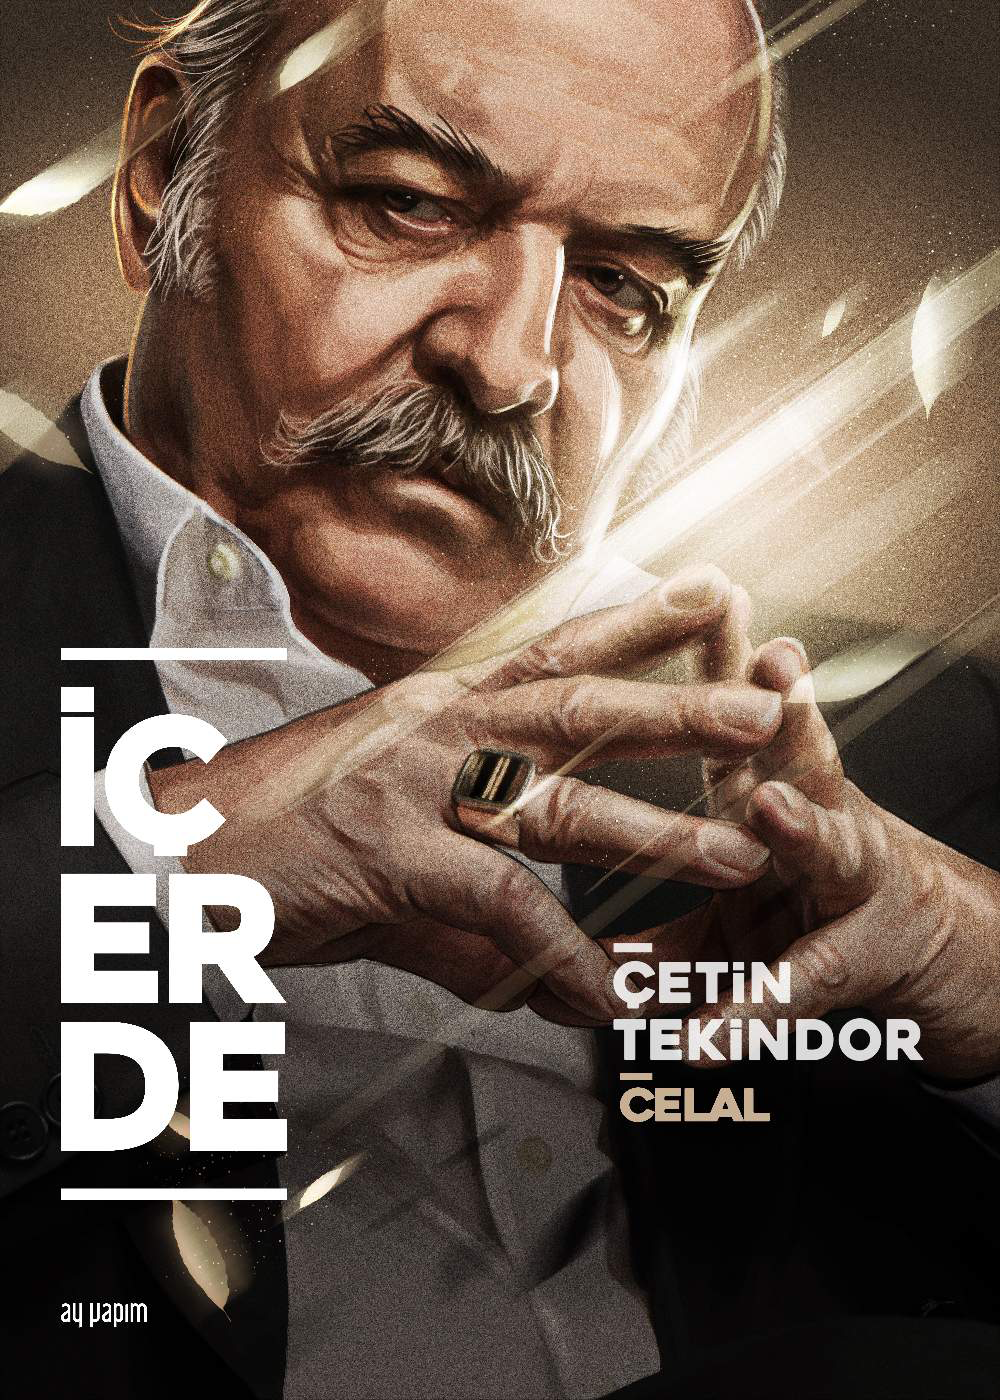 Icerde-Celal-1000